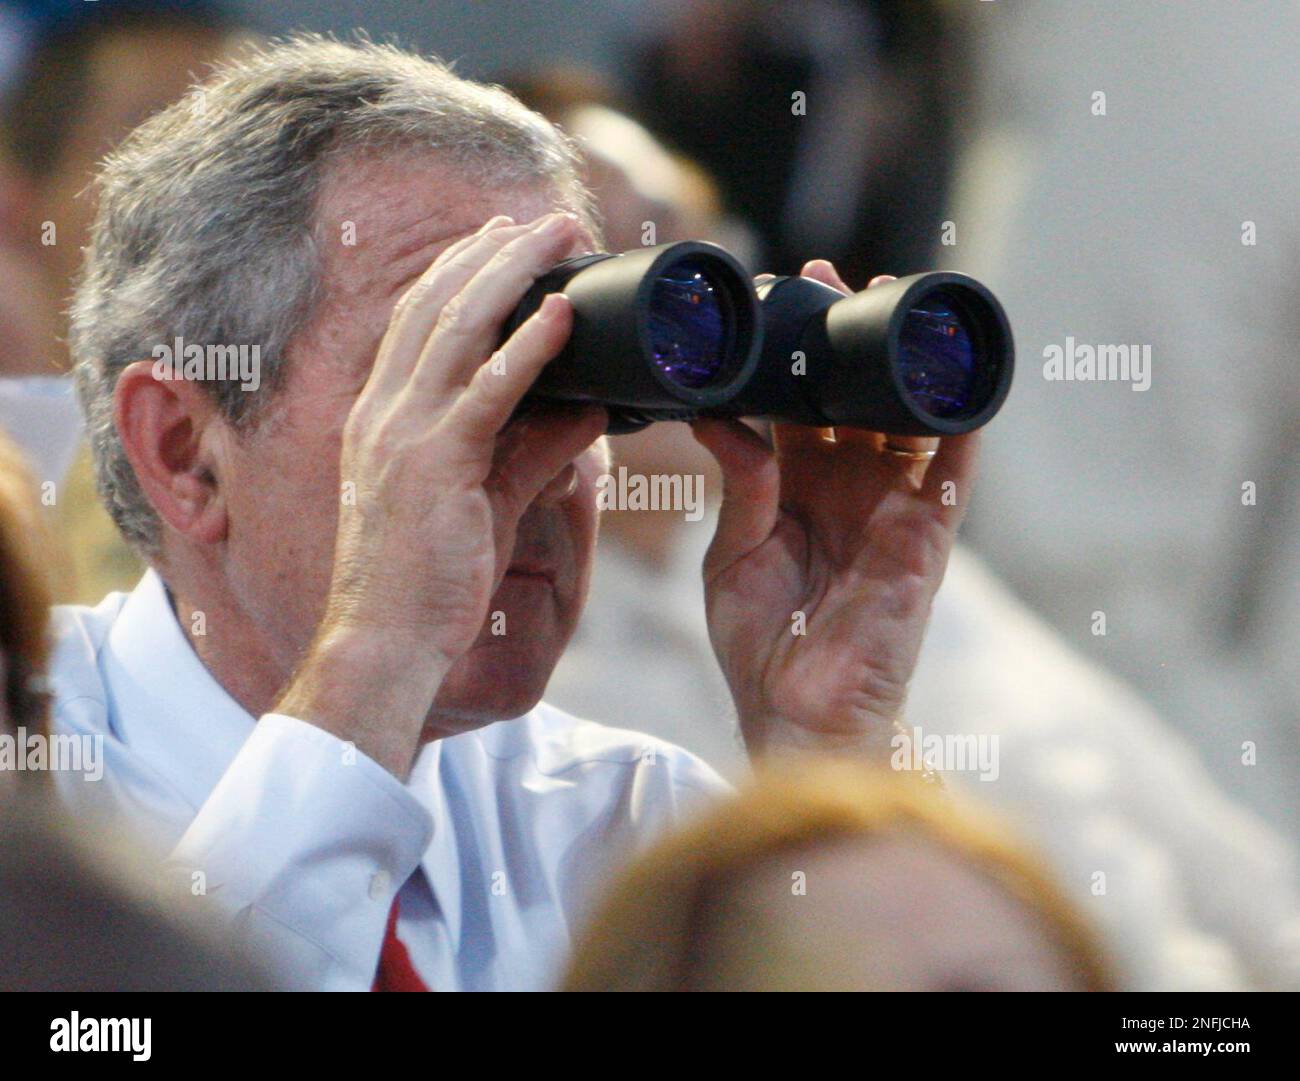 U.S. President George Bush uses binoculars to watch the Beijing 2008 Summer Olympics opening ceremony in Beijing, Friday, Aug. 8, 2008. (AP Photo/Charles Dharapak, Pool) Stock Photo